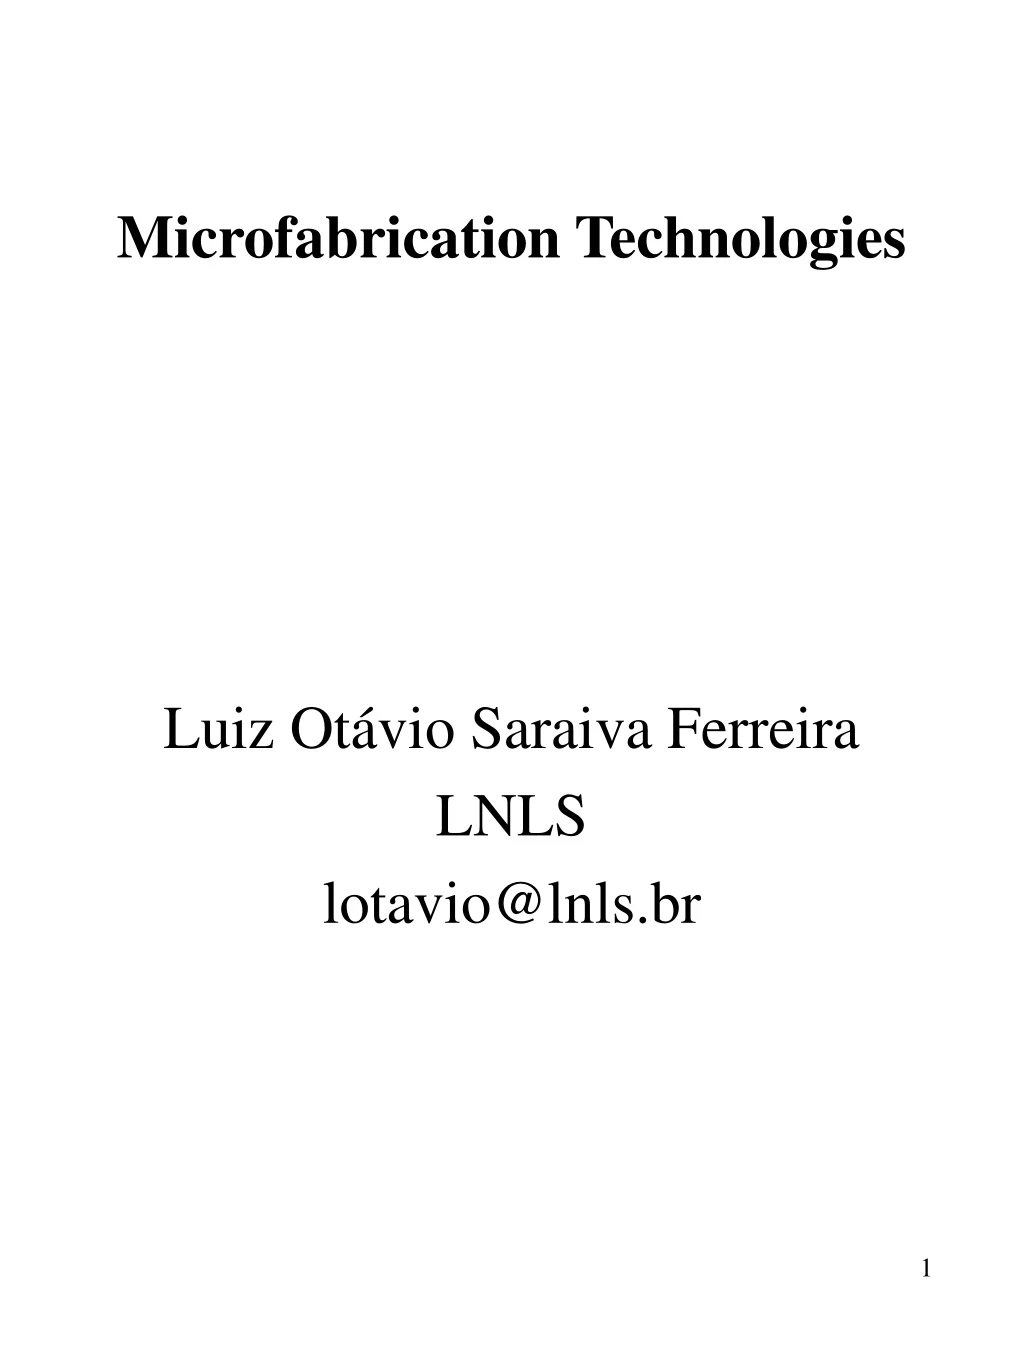 microfabrication technologies